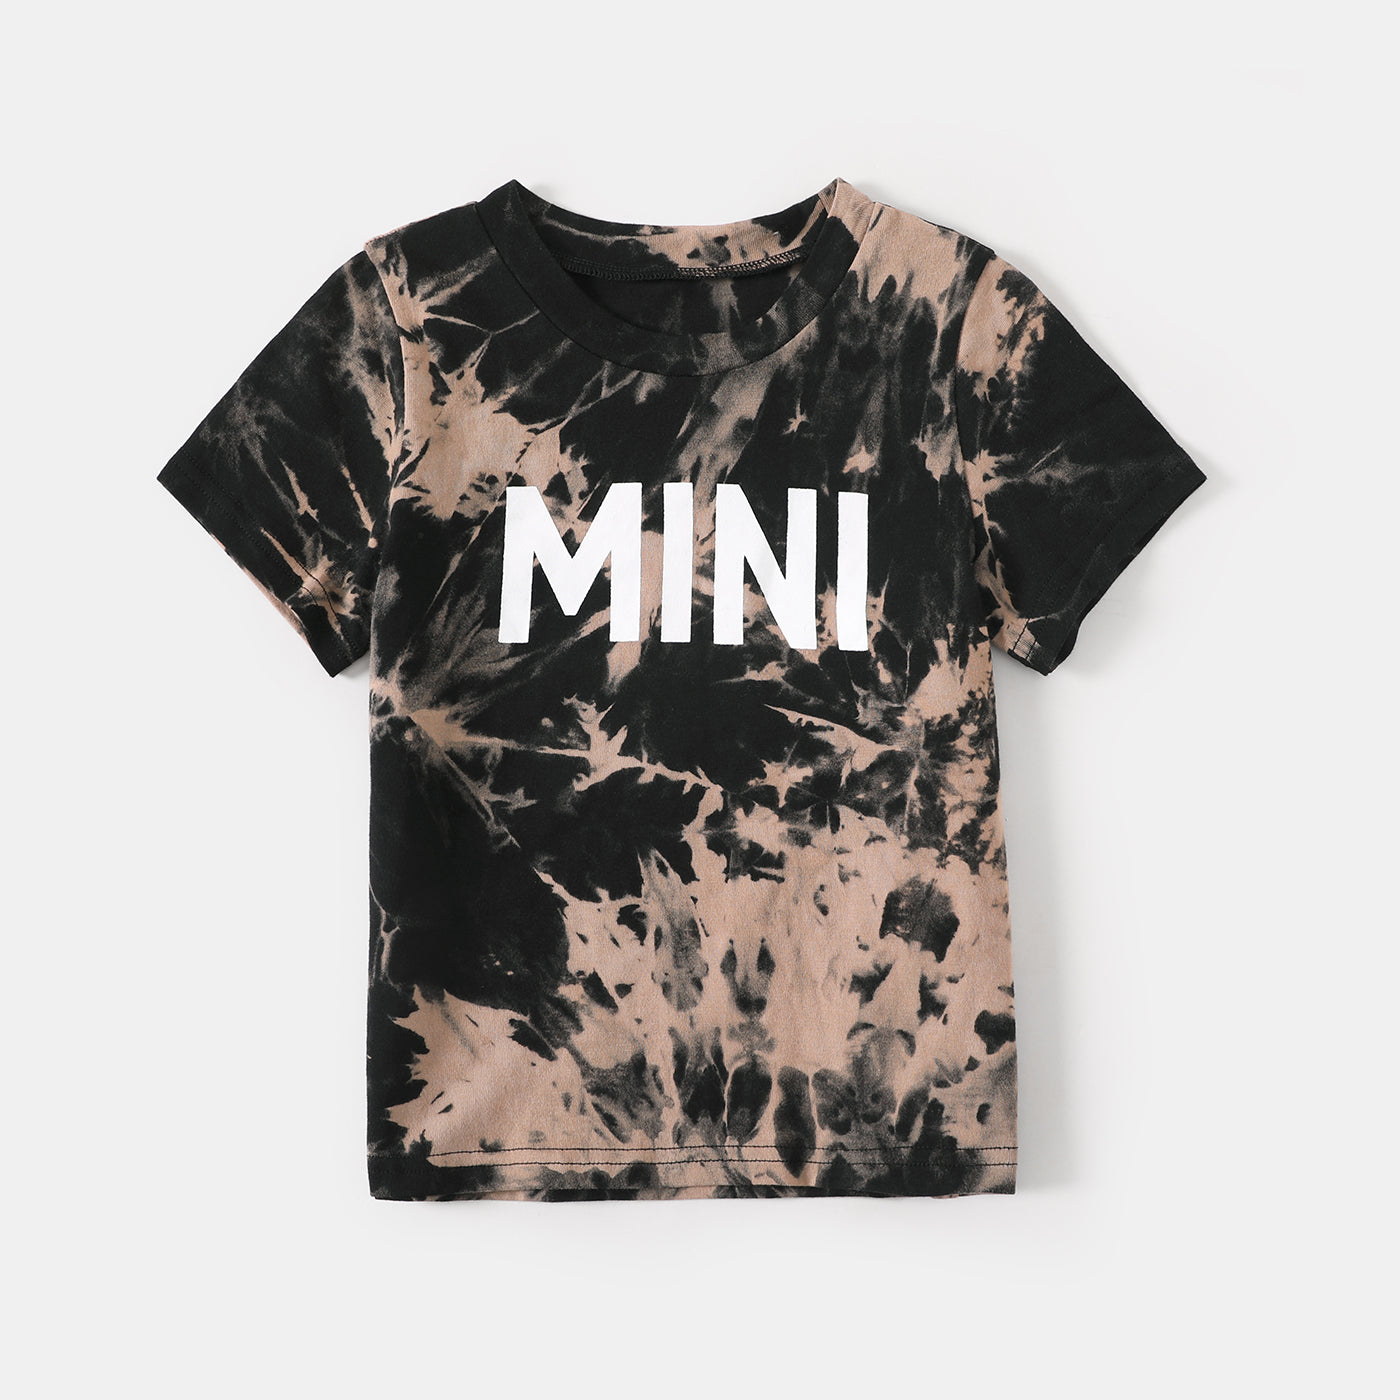 T-Shirt Tie Dye Negro "MINI" Niños